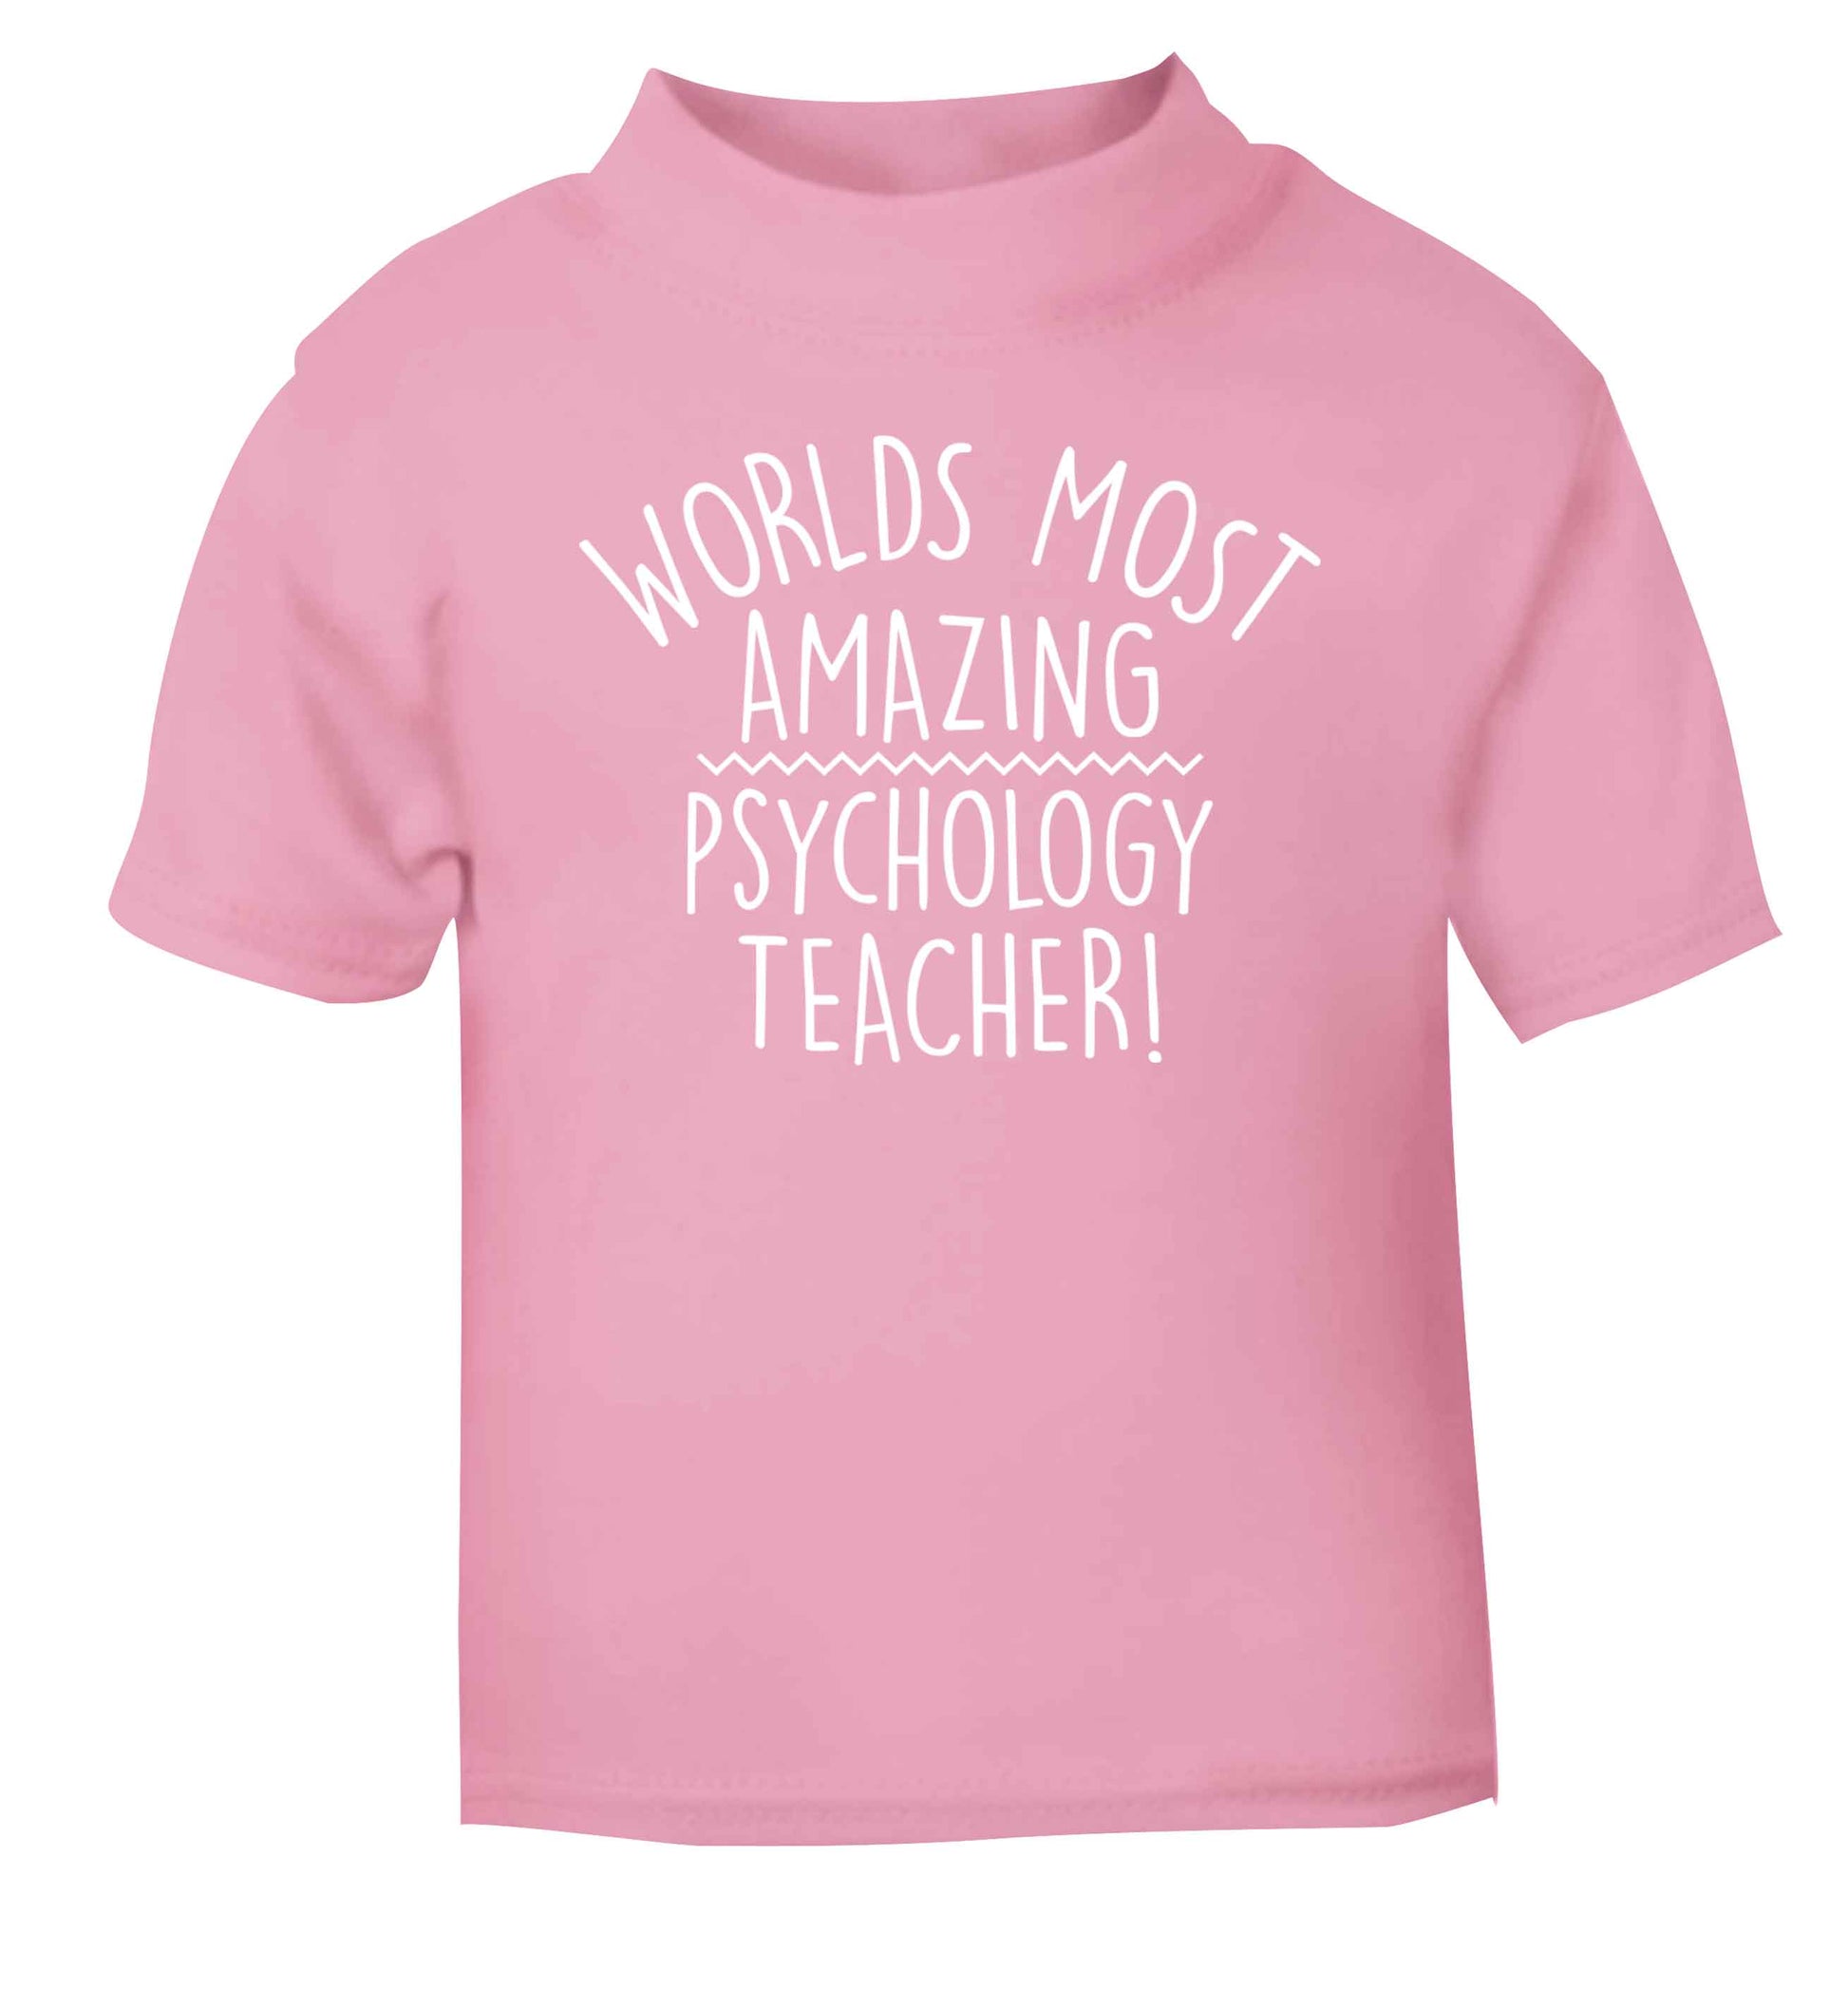 Worlds most amazing psychology teacher light pink baby toddler Tshirt 2 Years